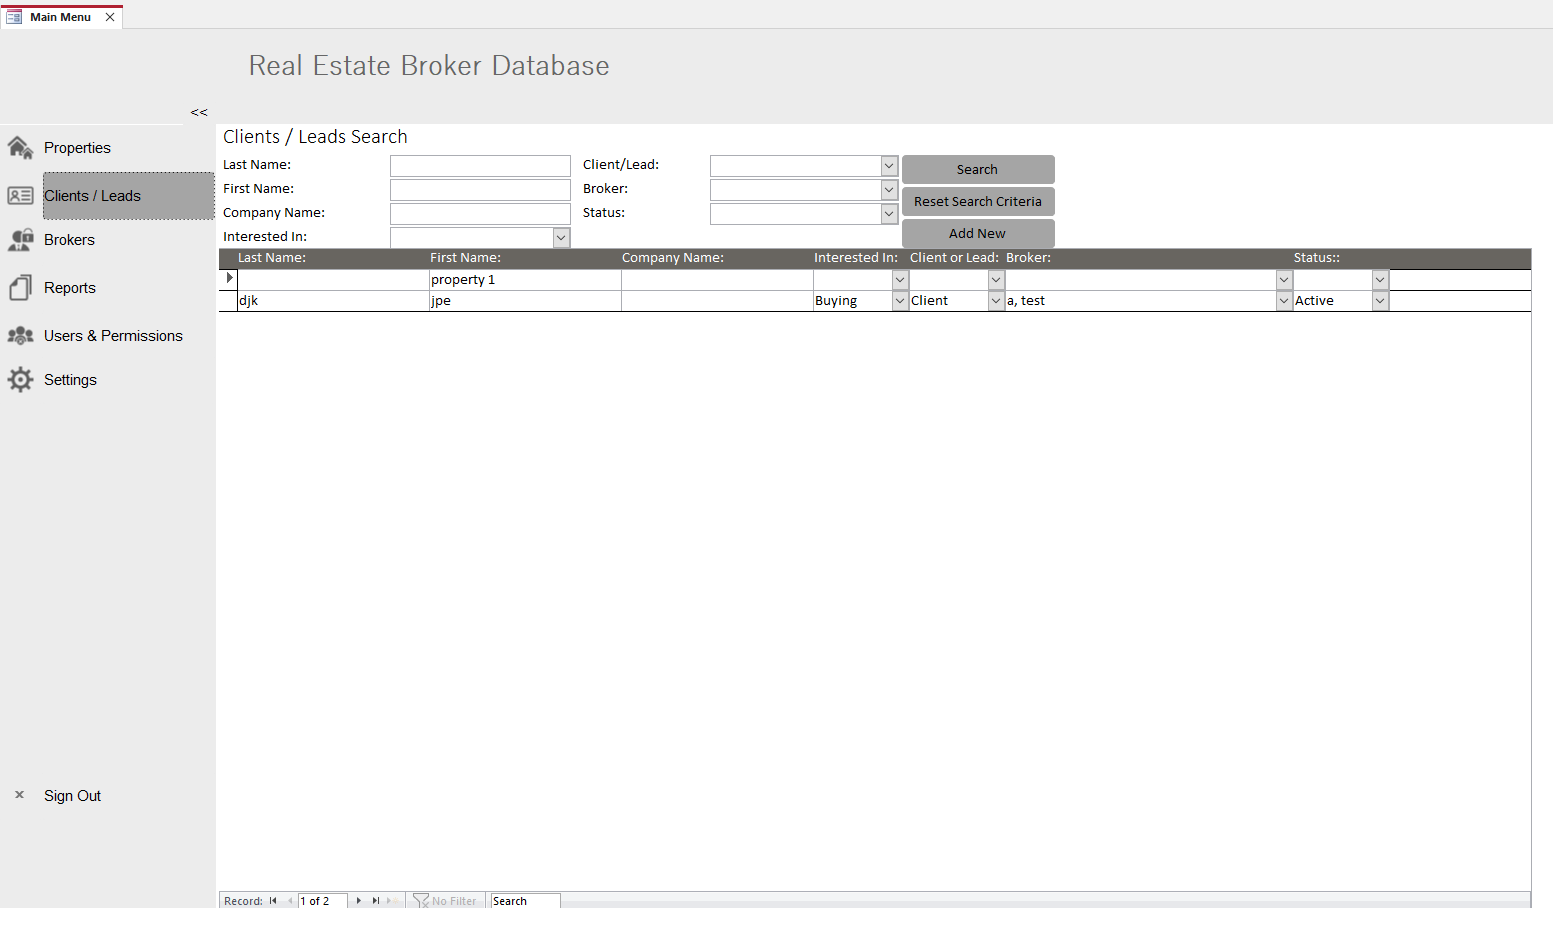 Real Estate Broker Database Template | Real Estate Broker Database